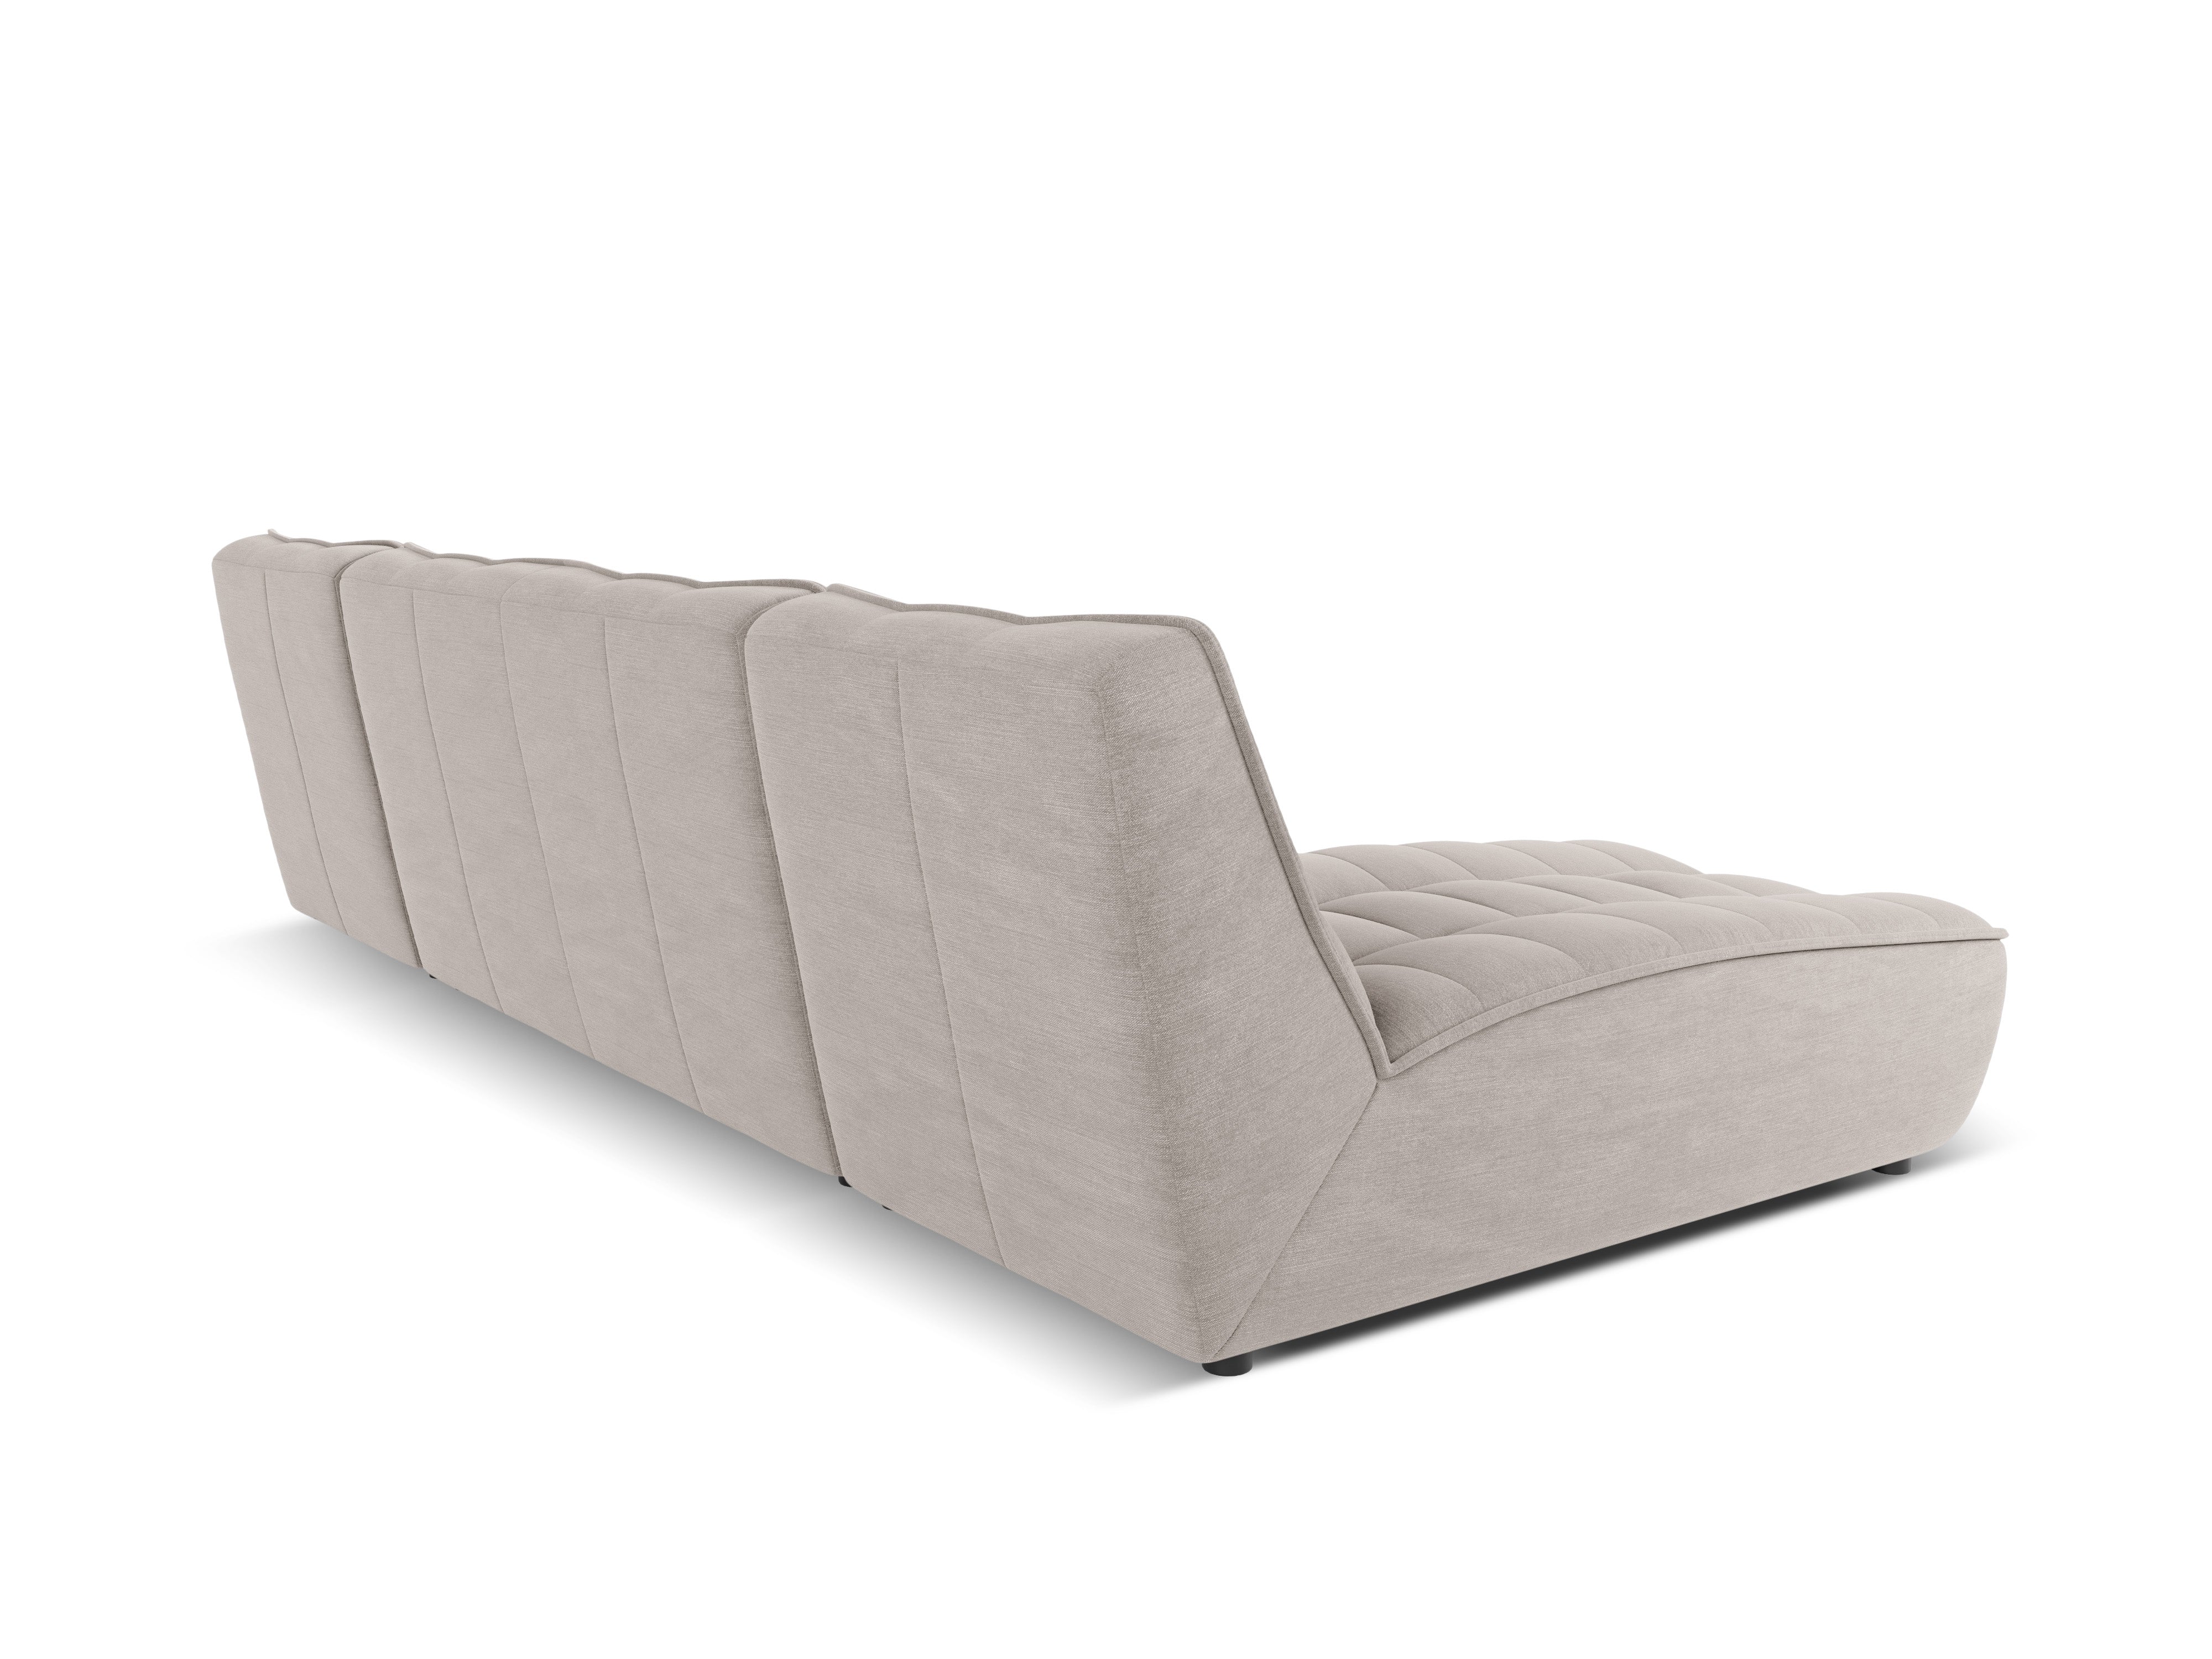 Modular Panoramic Sofa, "Moni", 6 Seats, 329x172x91
Made in Europe, Maison Heritage, Eye on Design